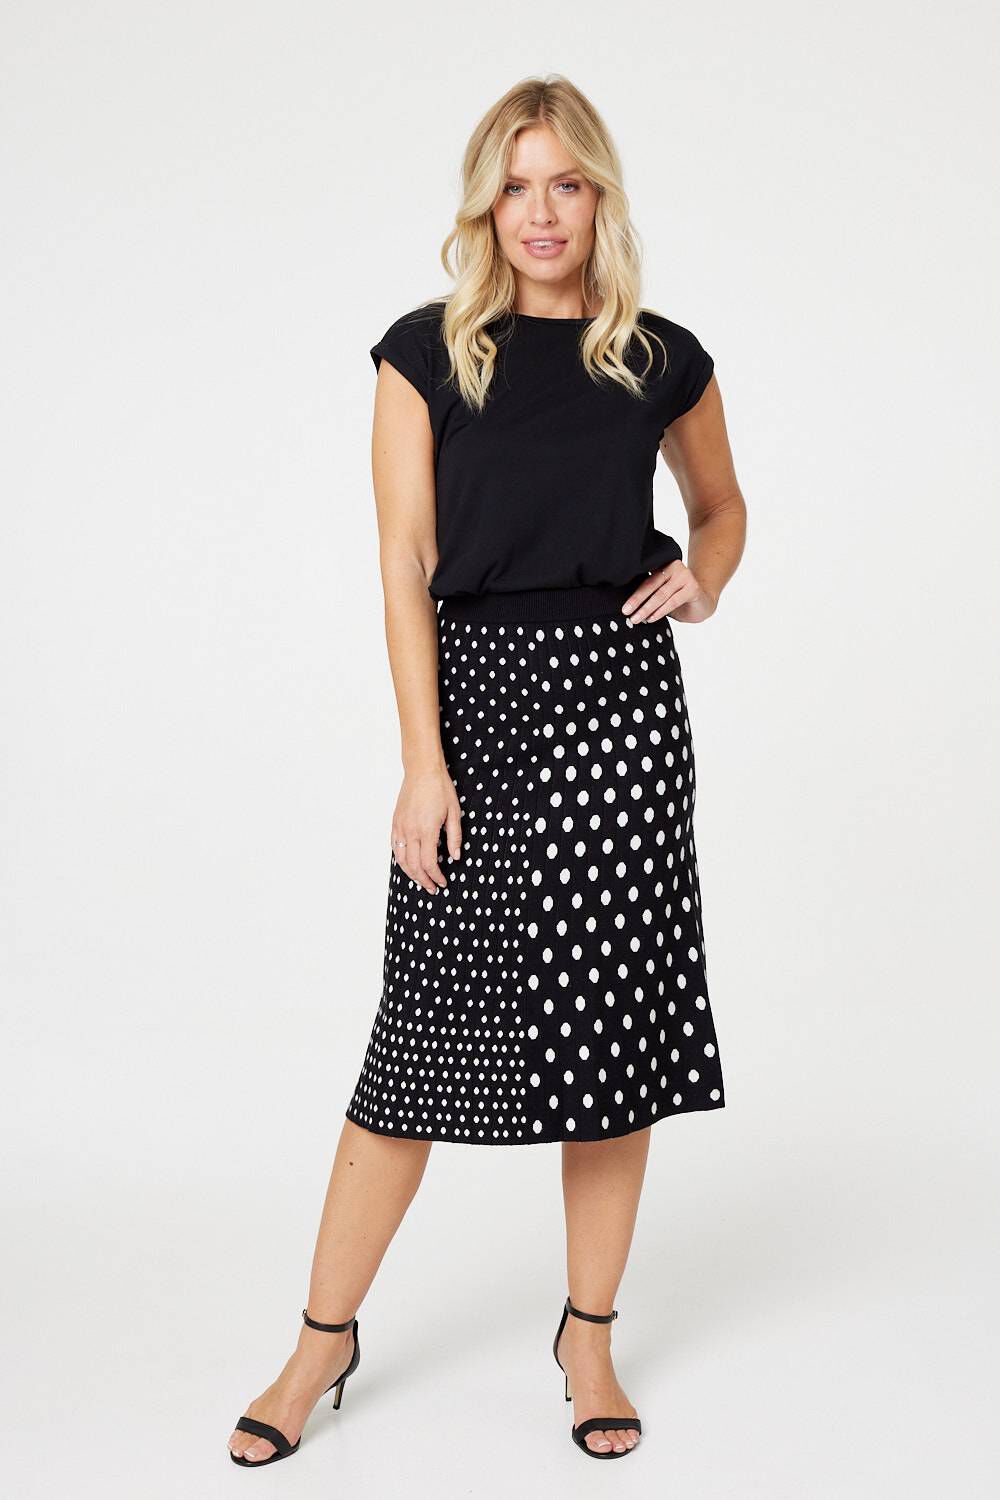 Izabel London Women’s Black and White Viscose Polka Dot A-Line Knitted Skirt, Size: 18